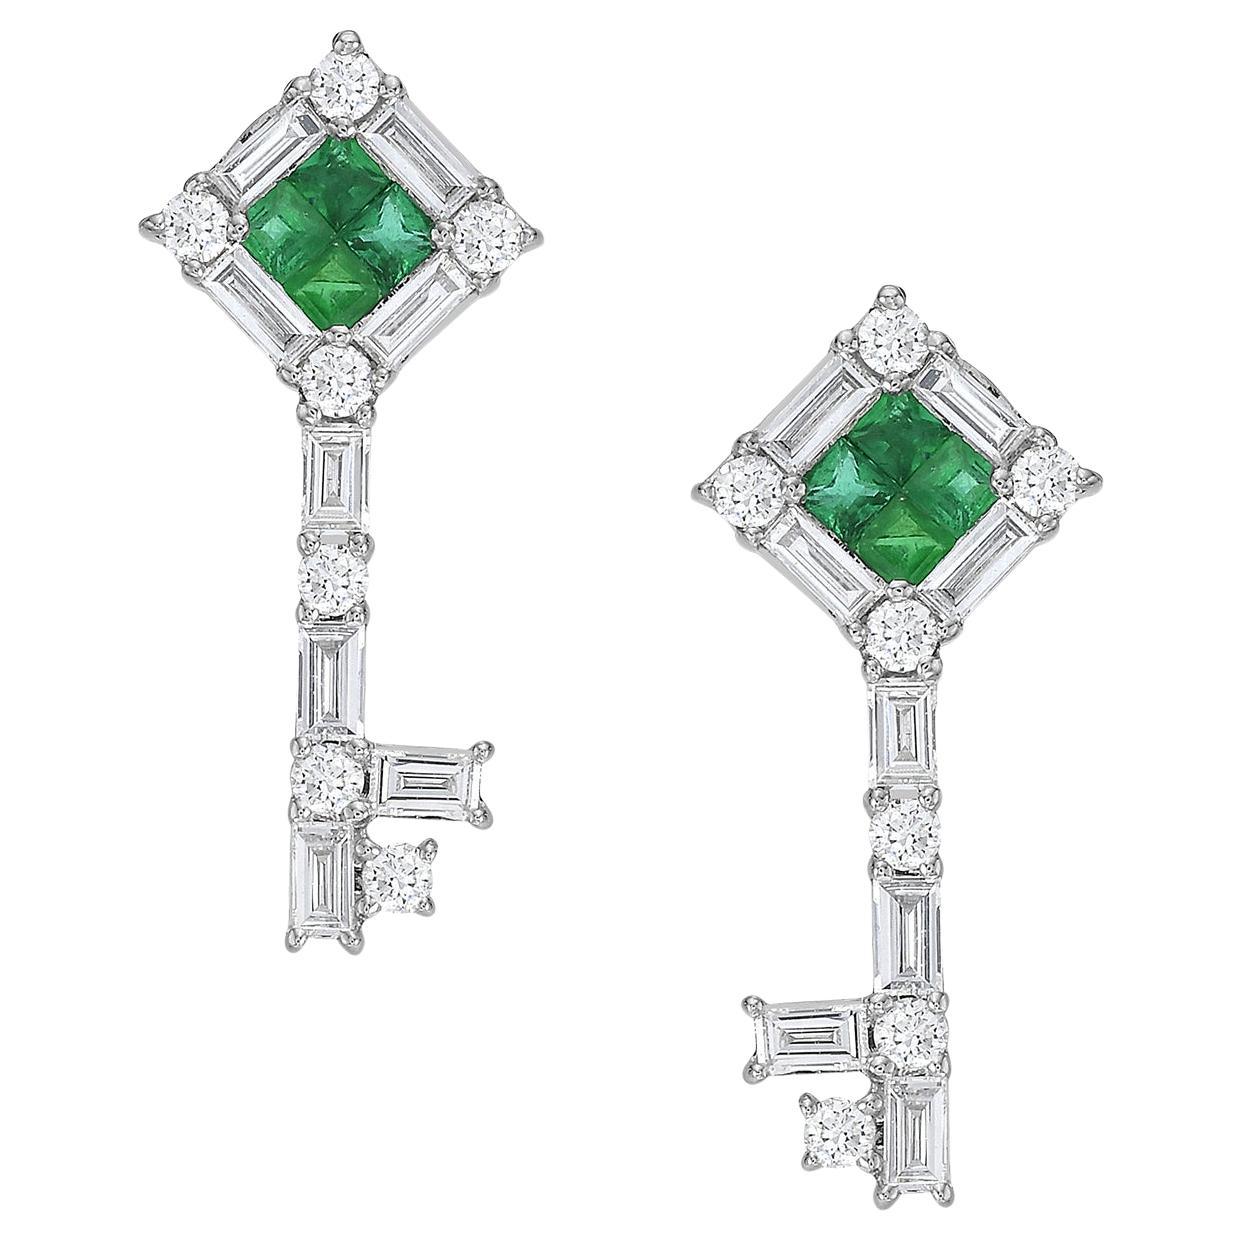 Emerald & Diamond Key Shaped Earrings Made In 18k White Gold